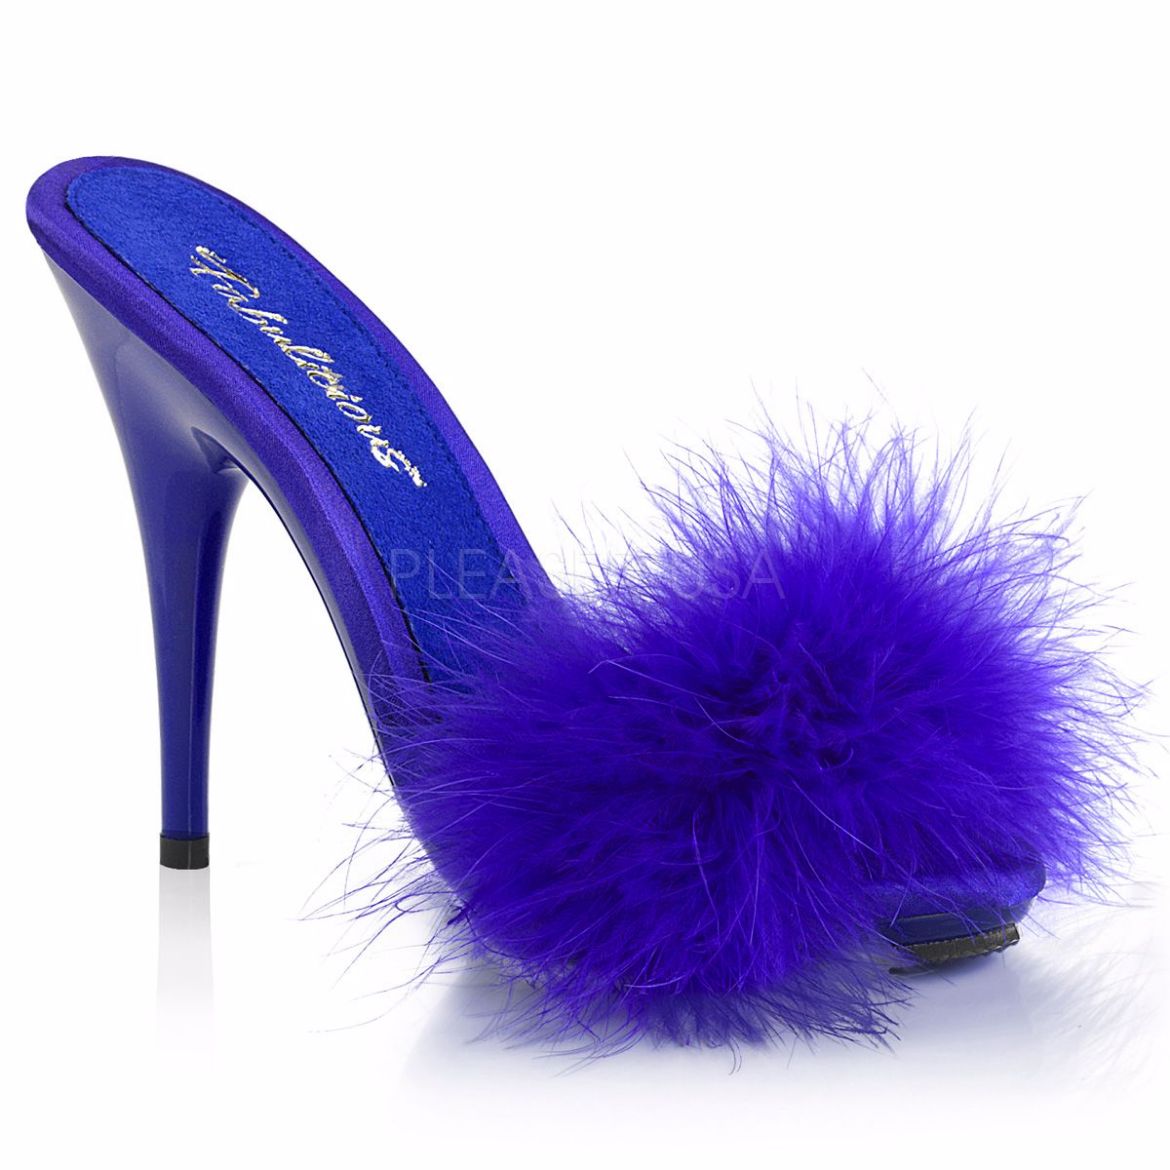 Product image of Fabulicious Poise-501F Blue Satin-Marabou Fur/Blue, 5 inch (12.7 cm) Heel, 3/8 inch (1 cm) Platform Sandal Shoes